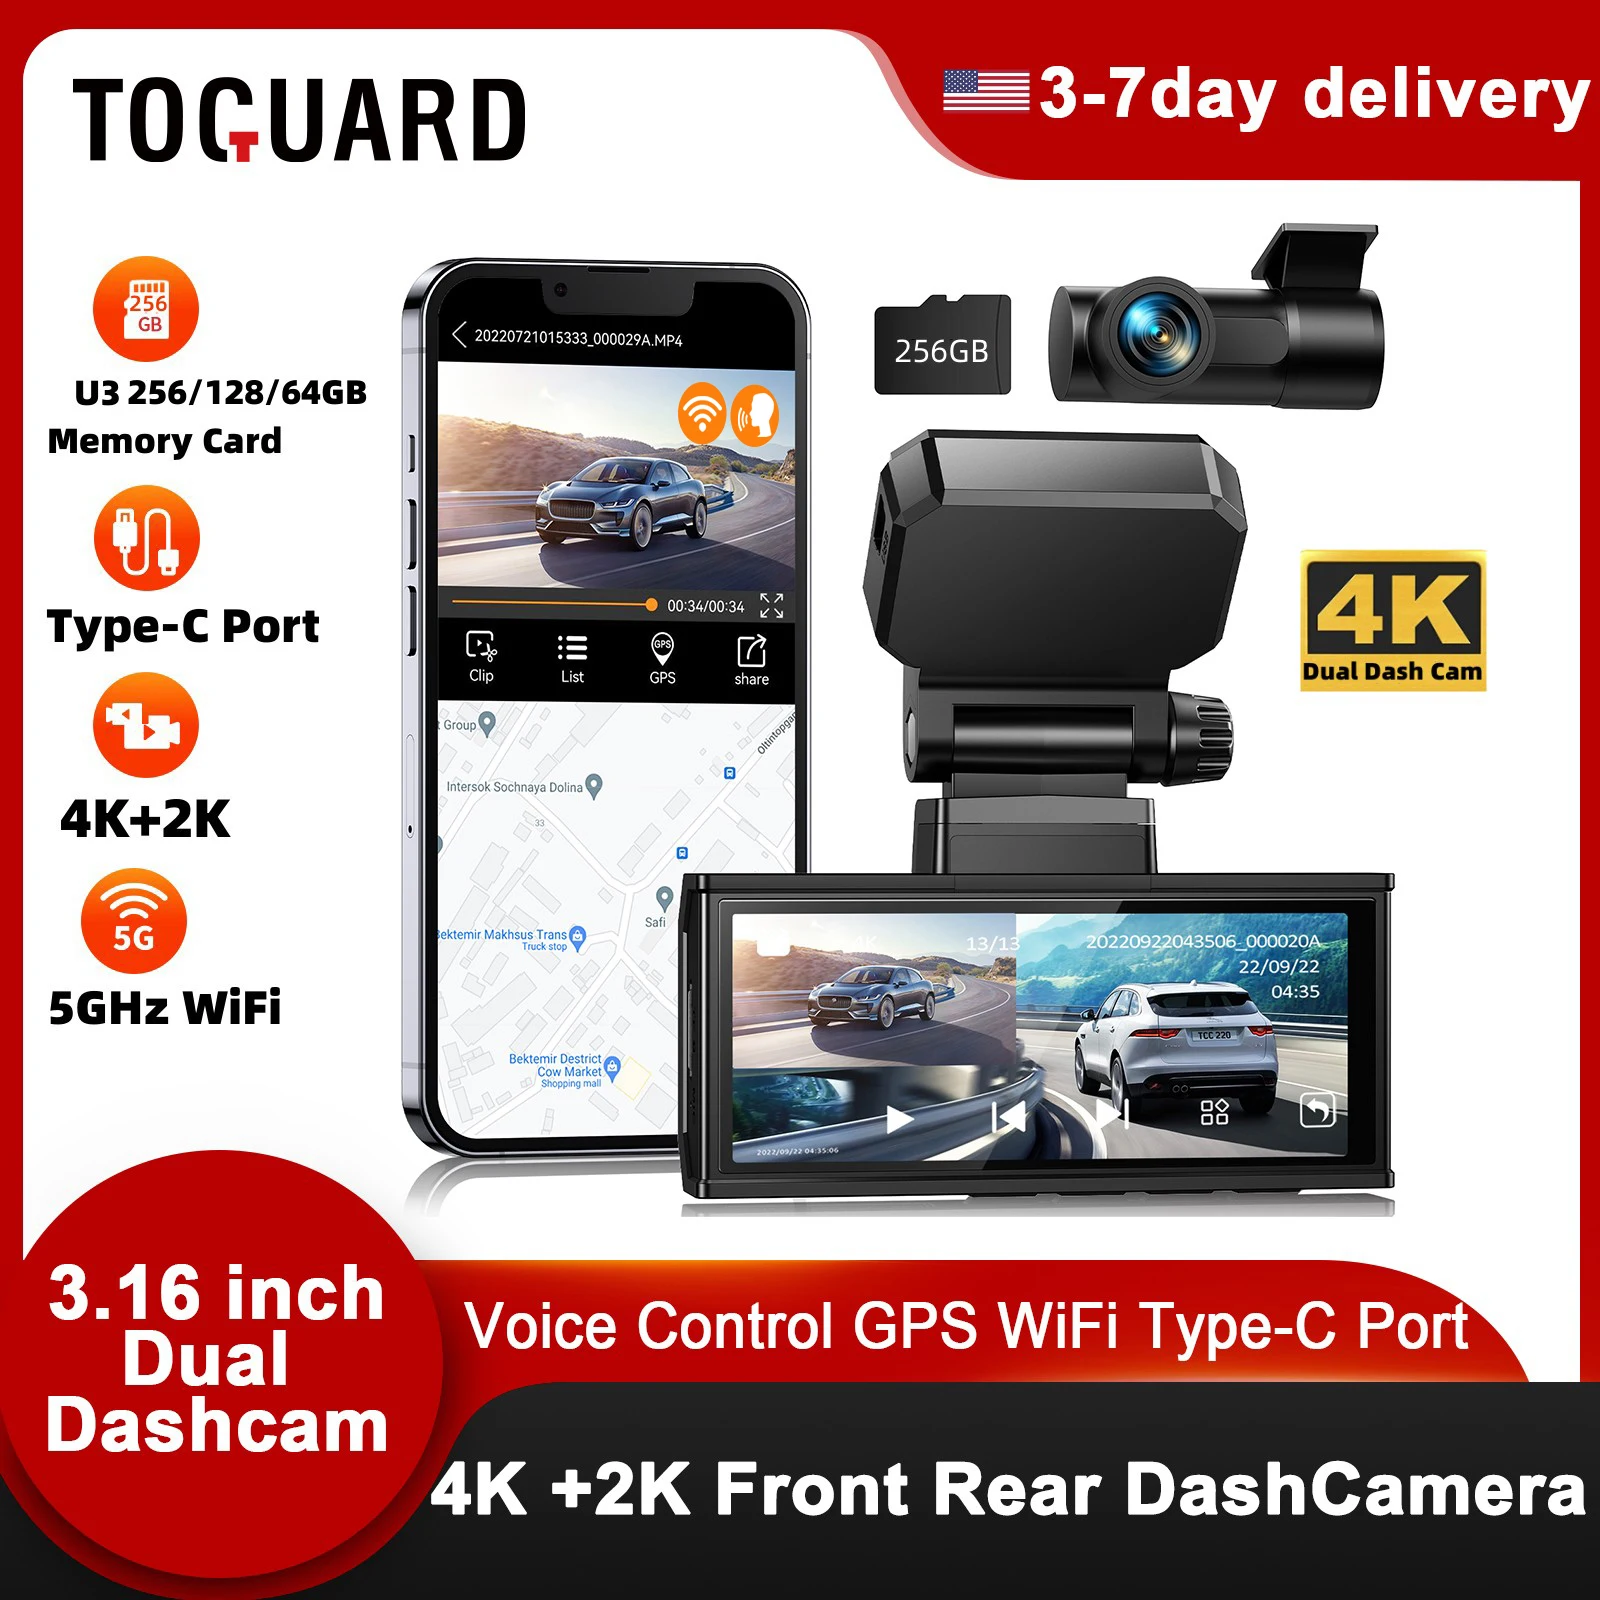 Buy Dash Cam Online, Toguard CE67A Dash Cam